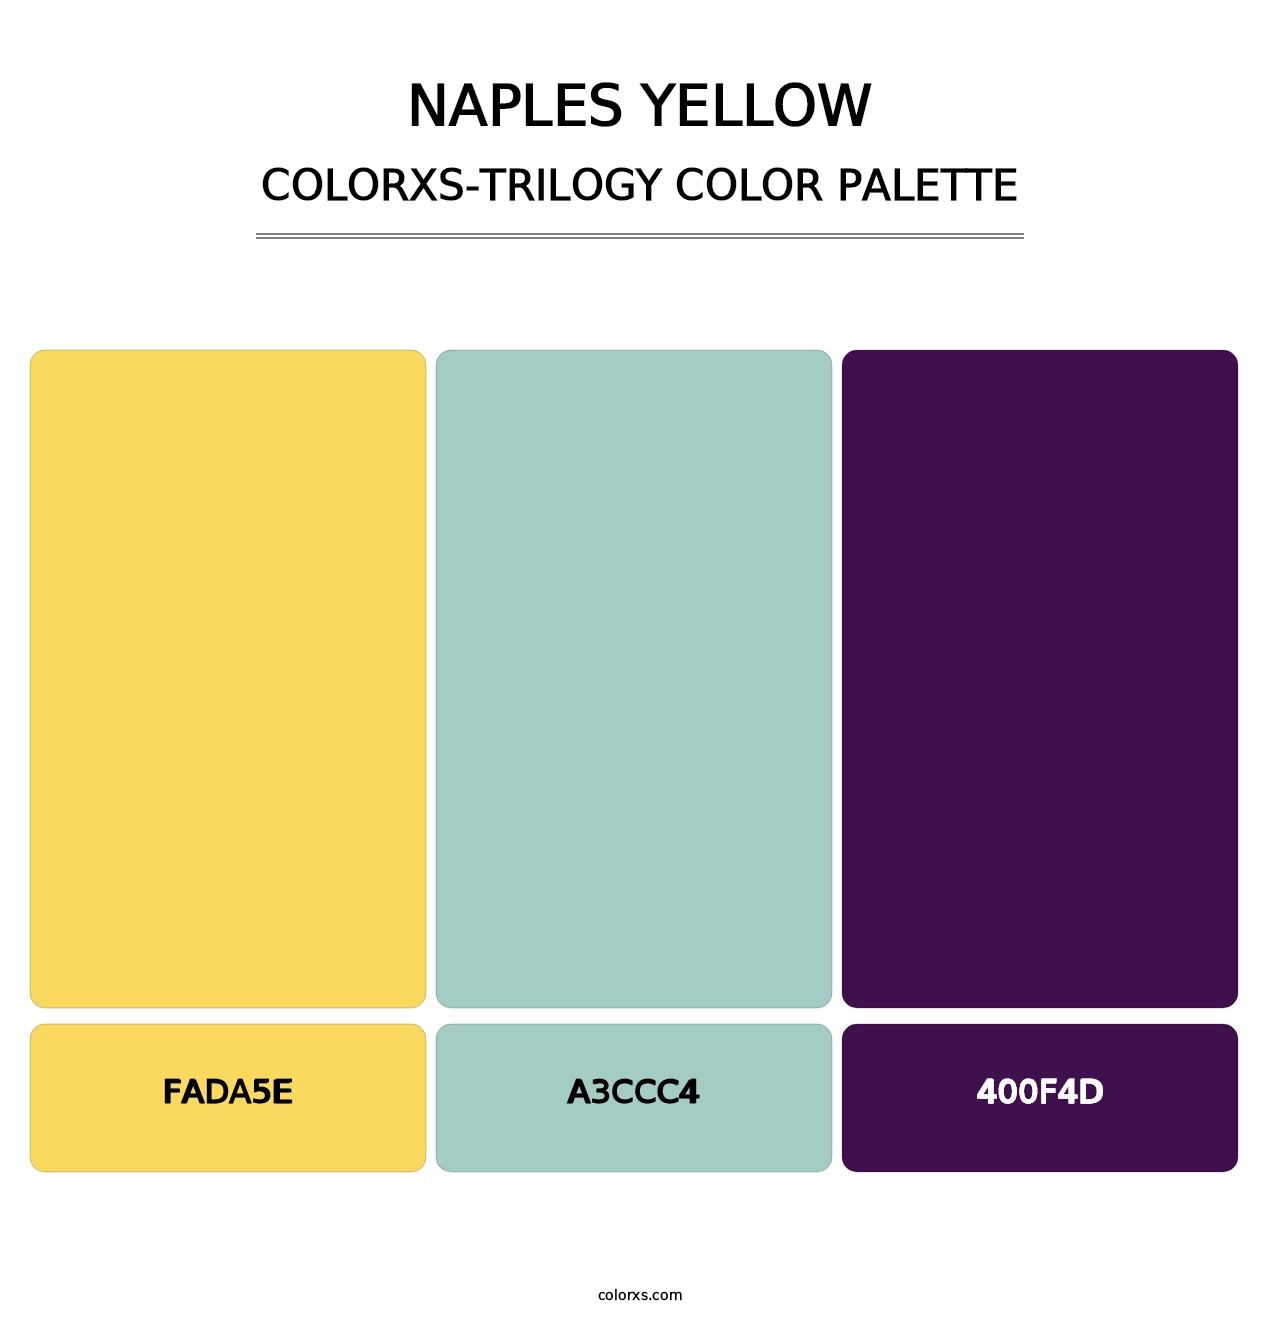 Naples Yellow - Colorxs Trilogy Palette